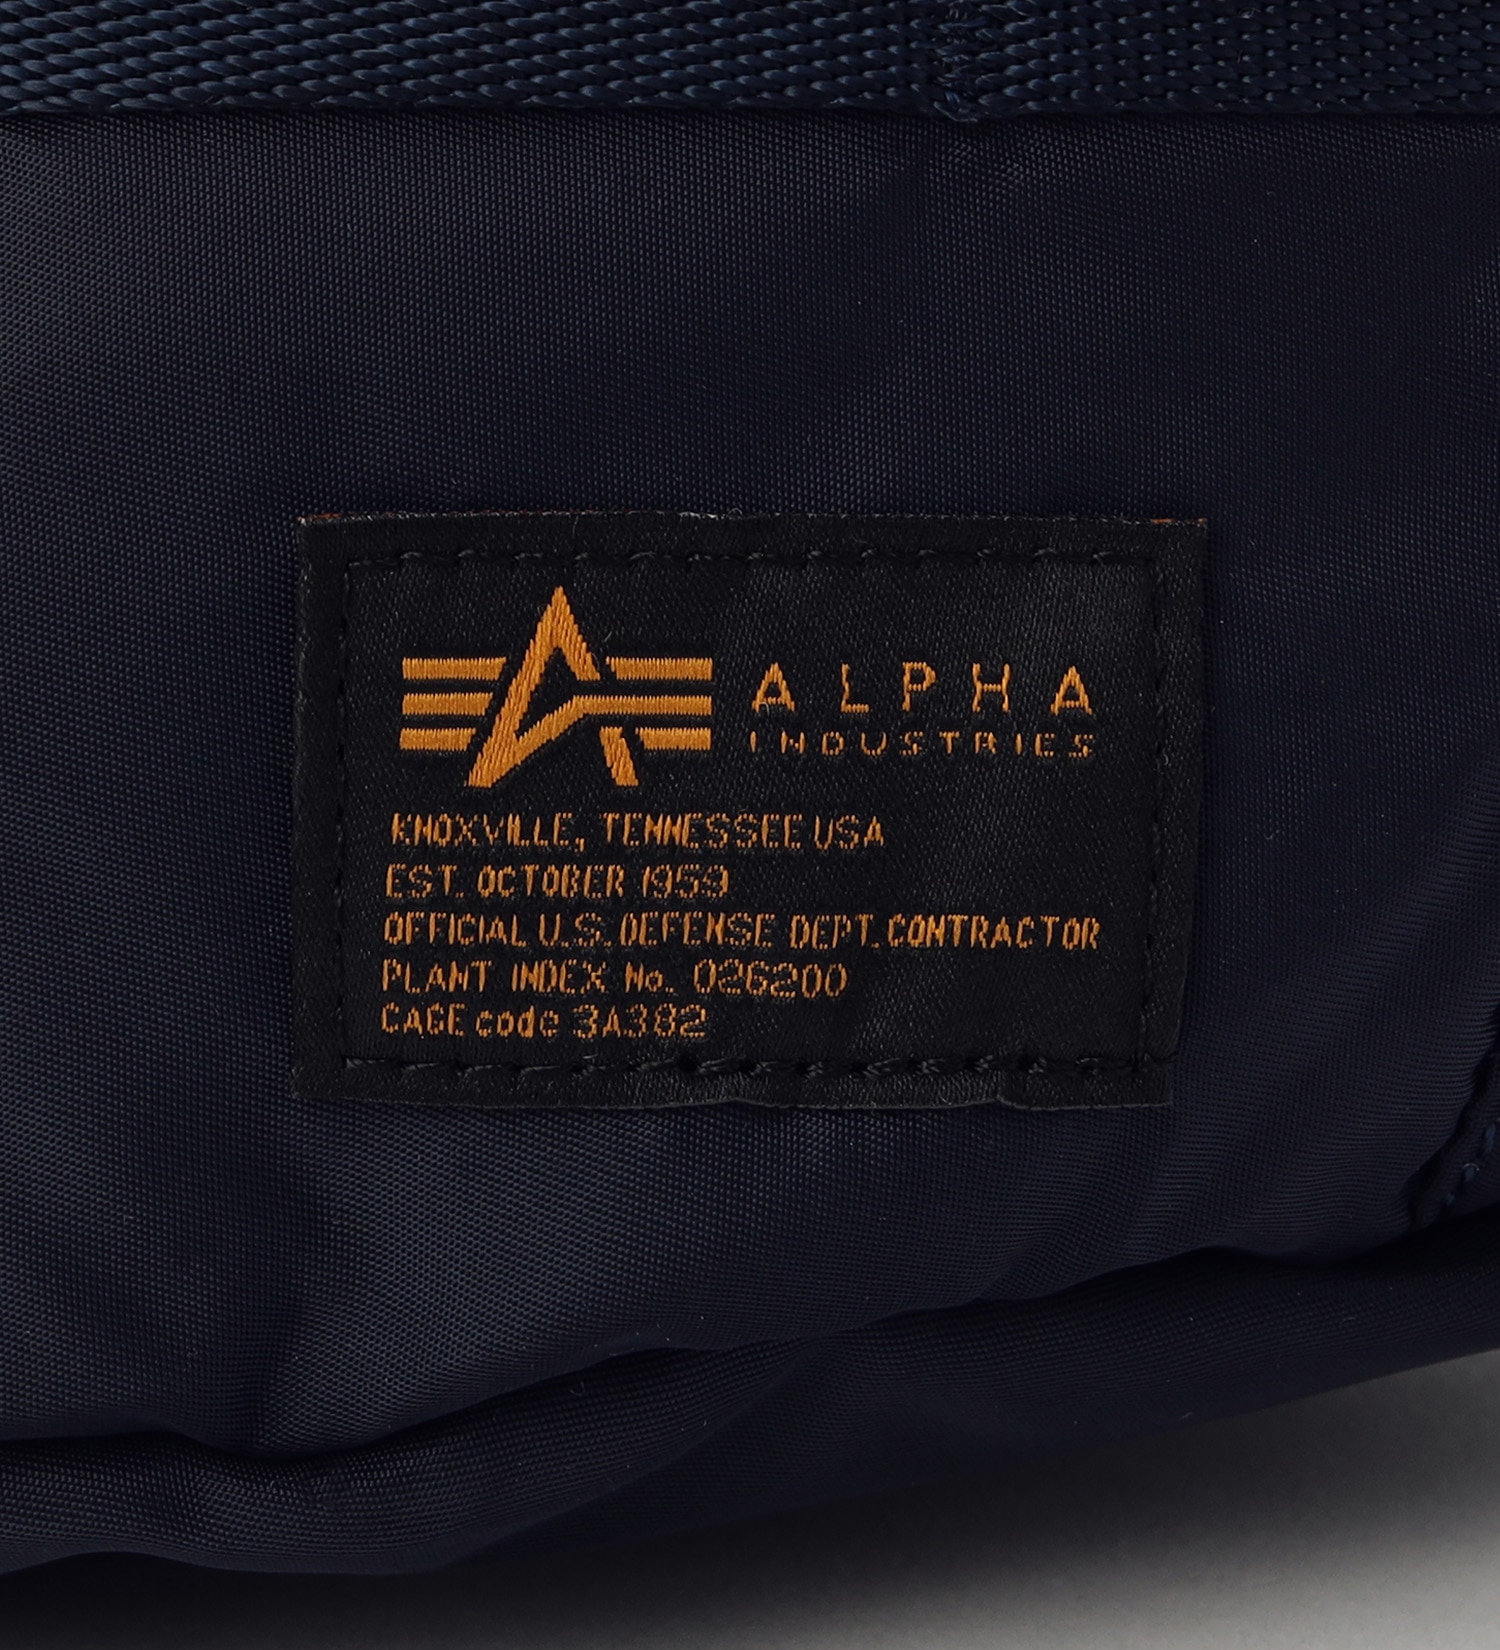 ALPHA(アルファ)のナイロンコーデュラツイル ウエストバッグ|バッグ/ボディバッグ/ウェストポーチ/メンズ|ネイビー